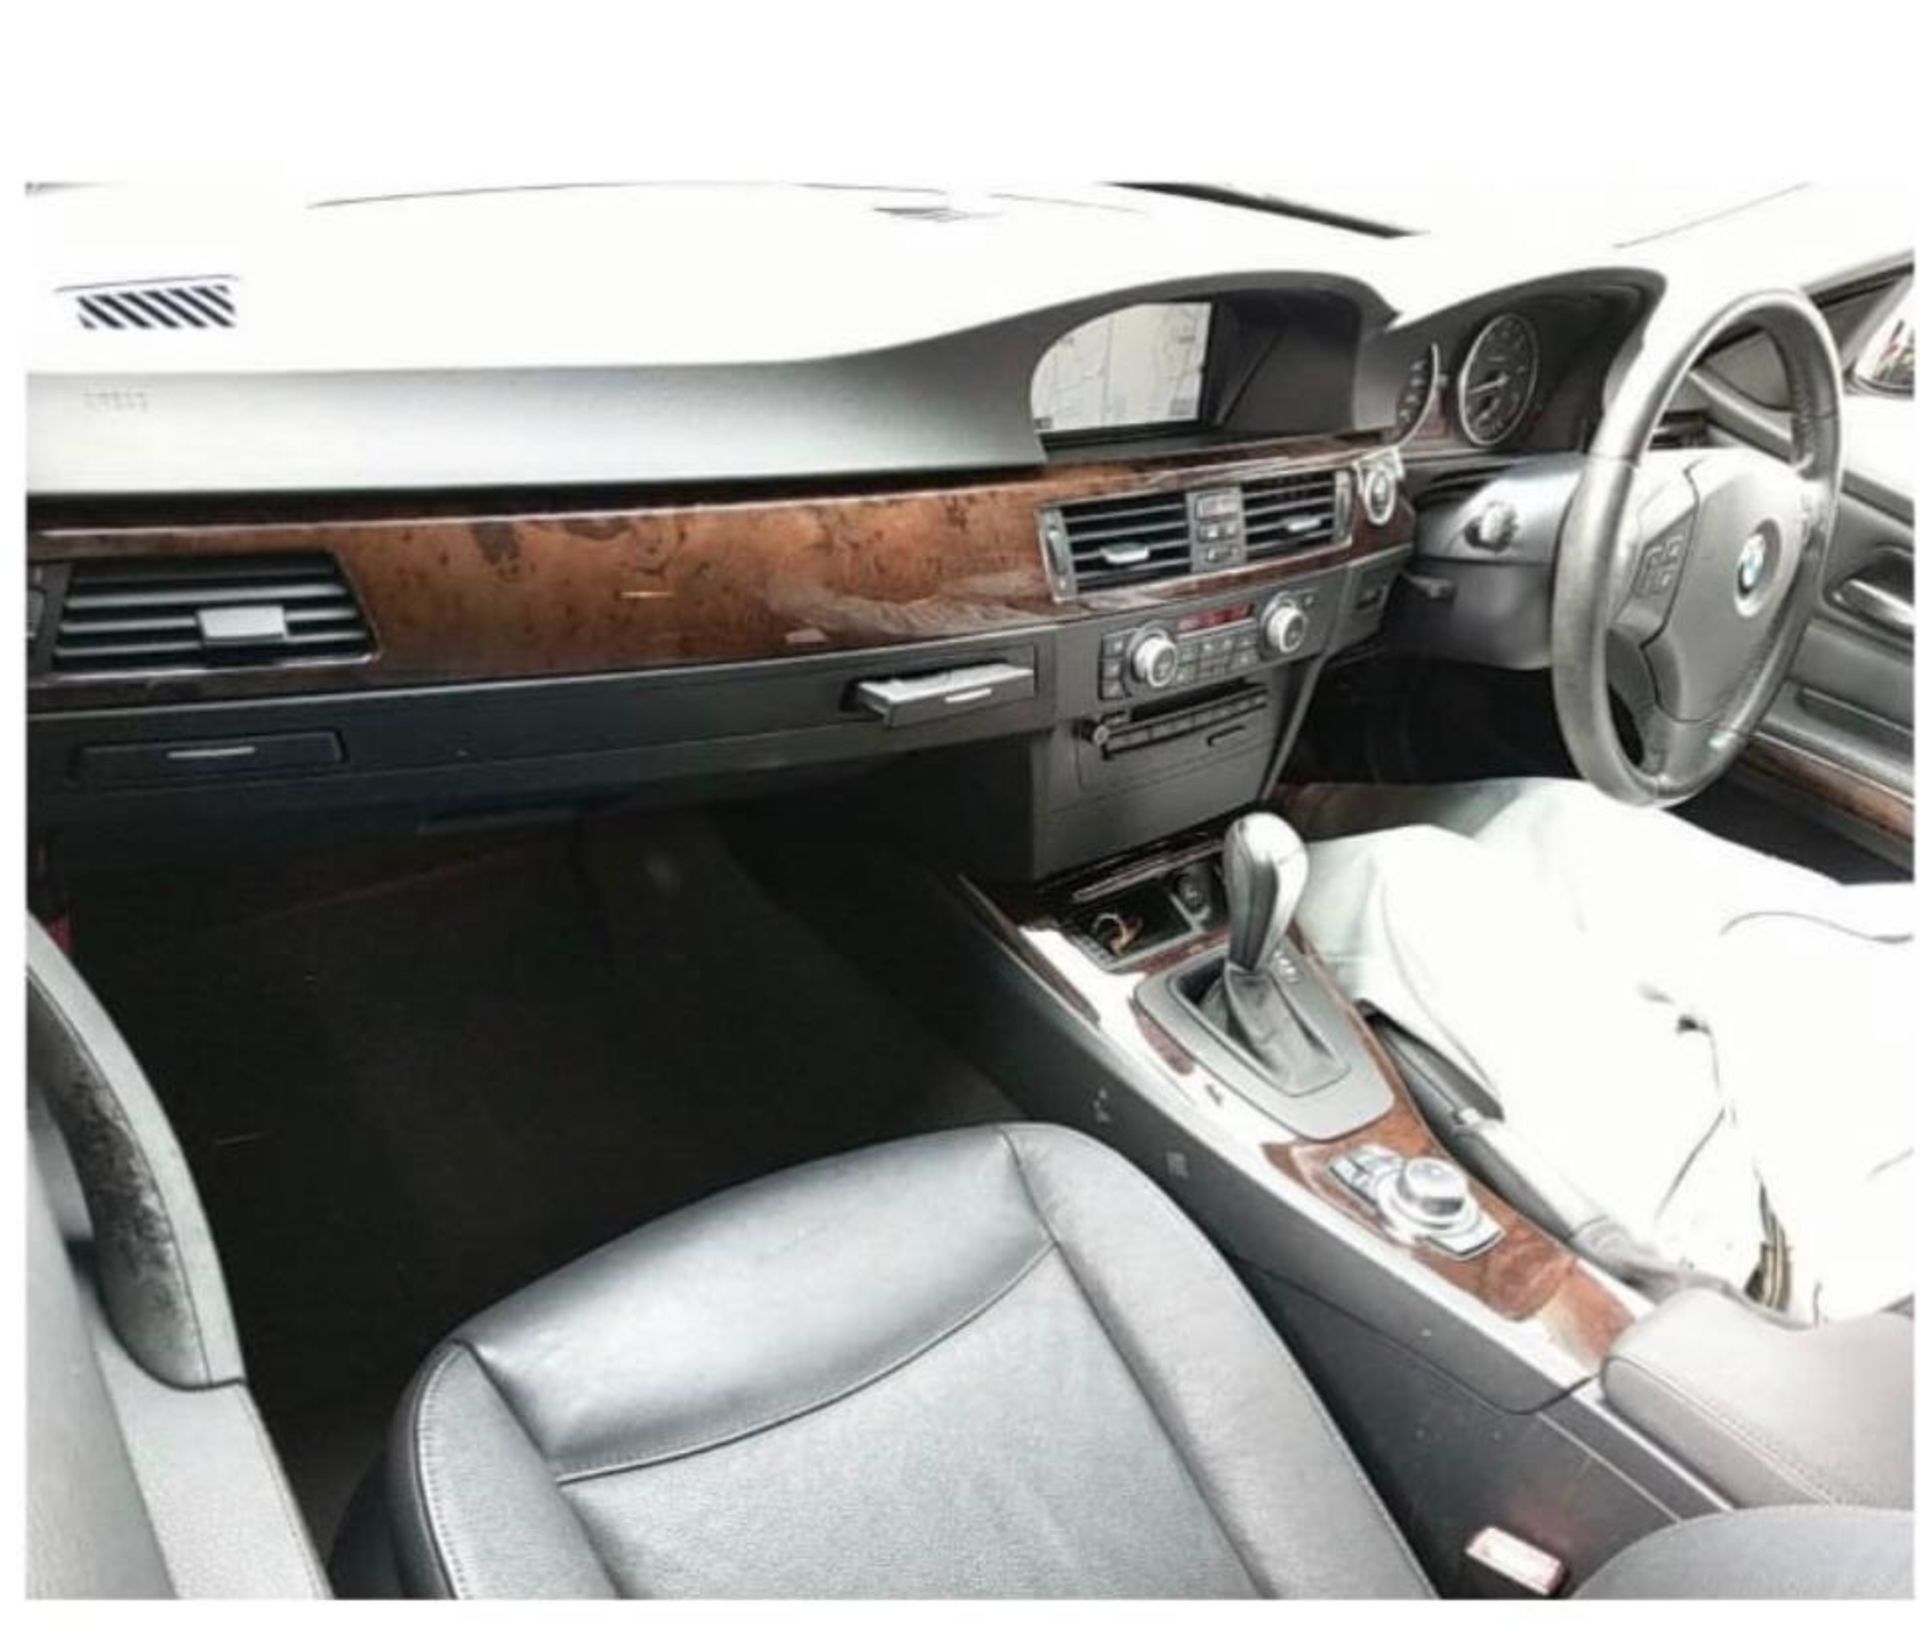 2010 BMW 320i Estate - Petrol ULEZ complient. - Image 4 of 5